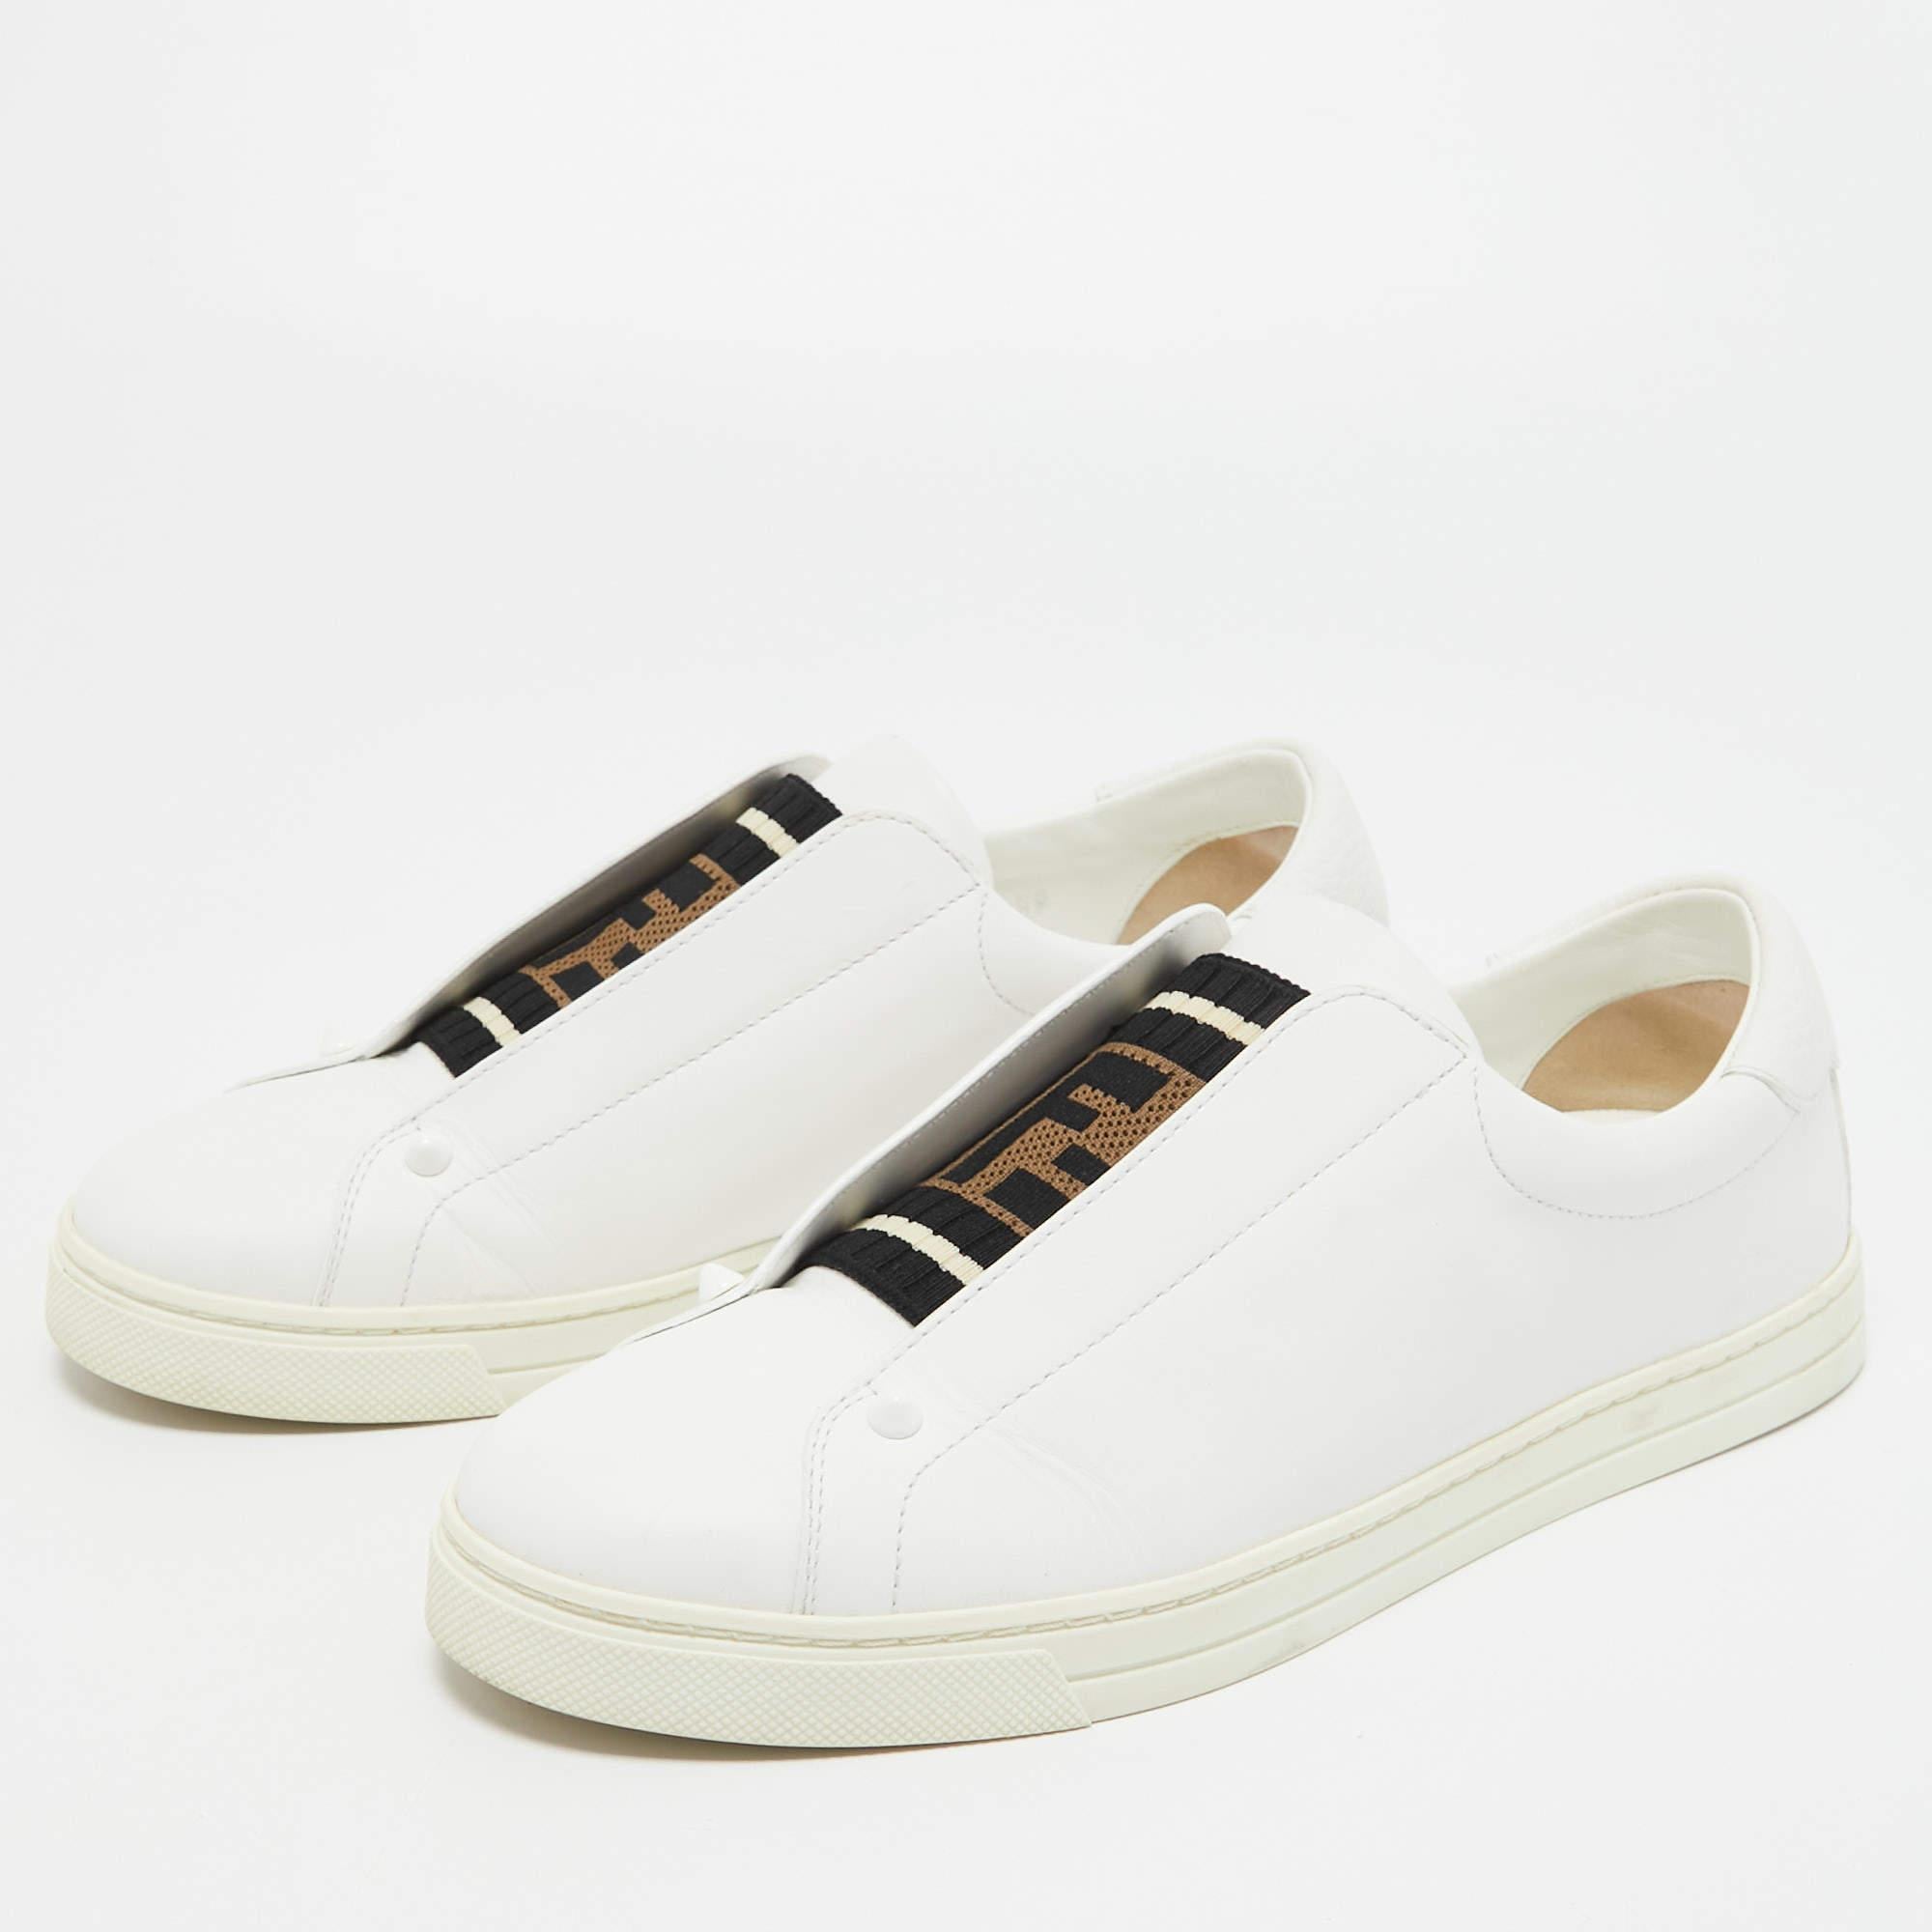 Women's Fendi White Leather and Logo Knit Fabric Rockoko Slip On Sneakers Size 39